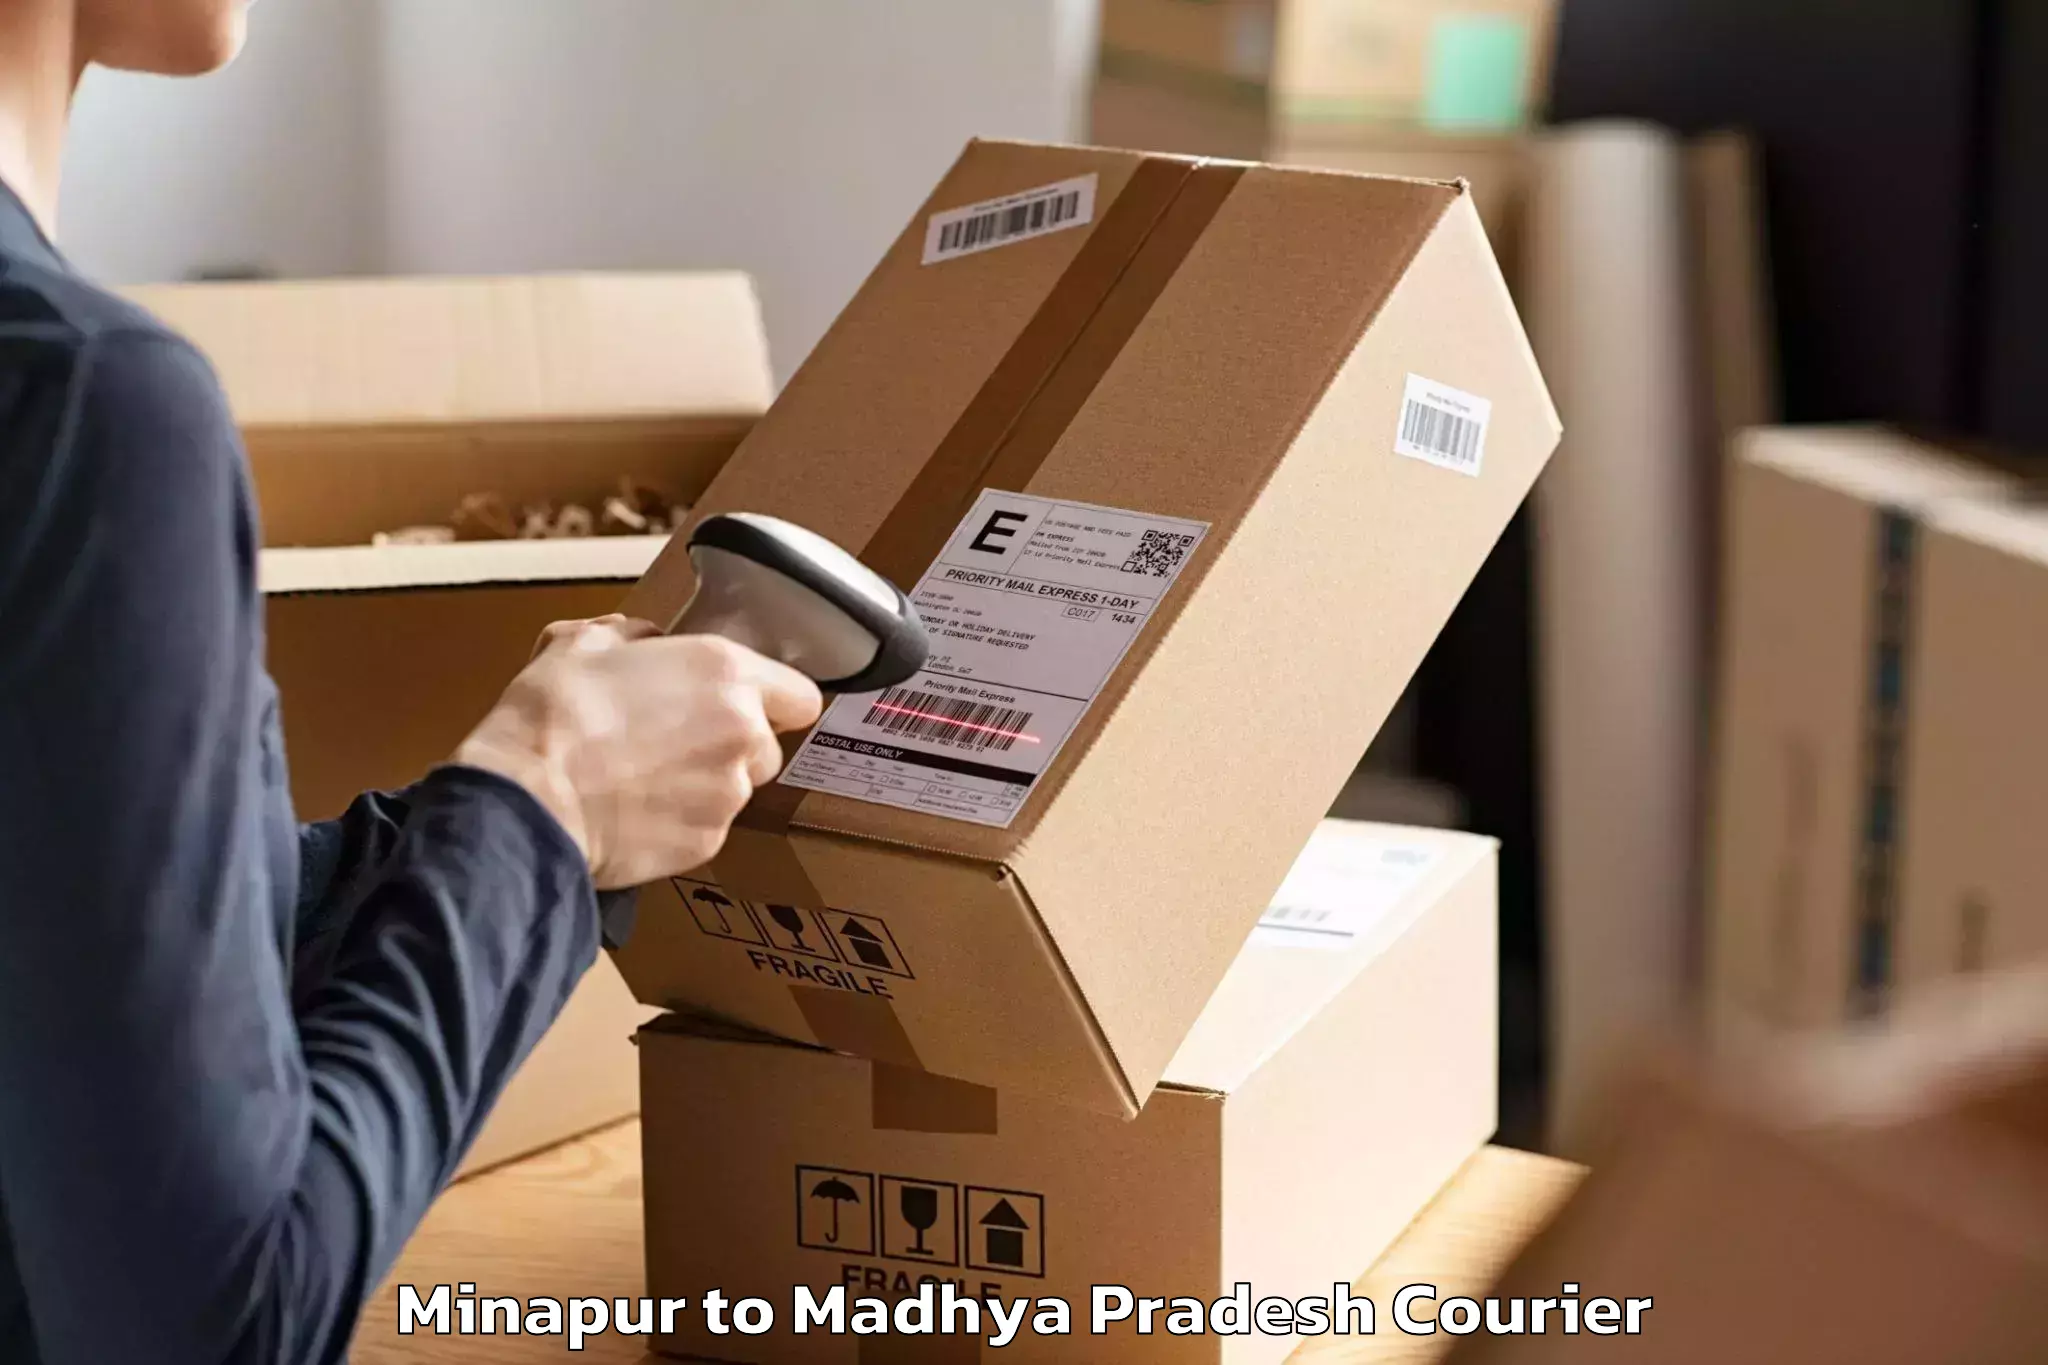 Professional furniture movers Minapur to Depalpur